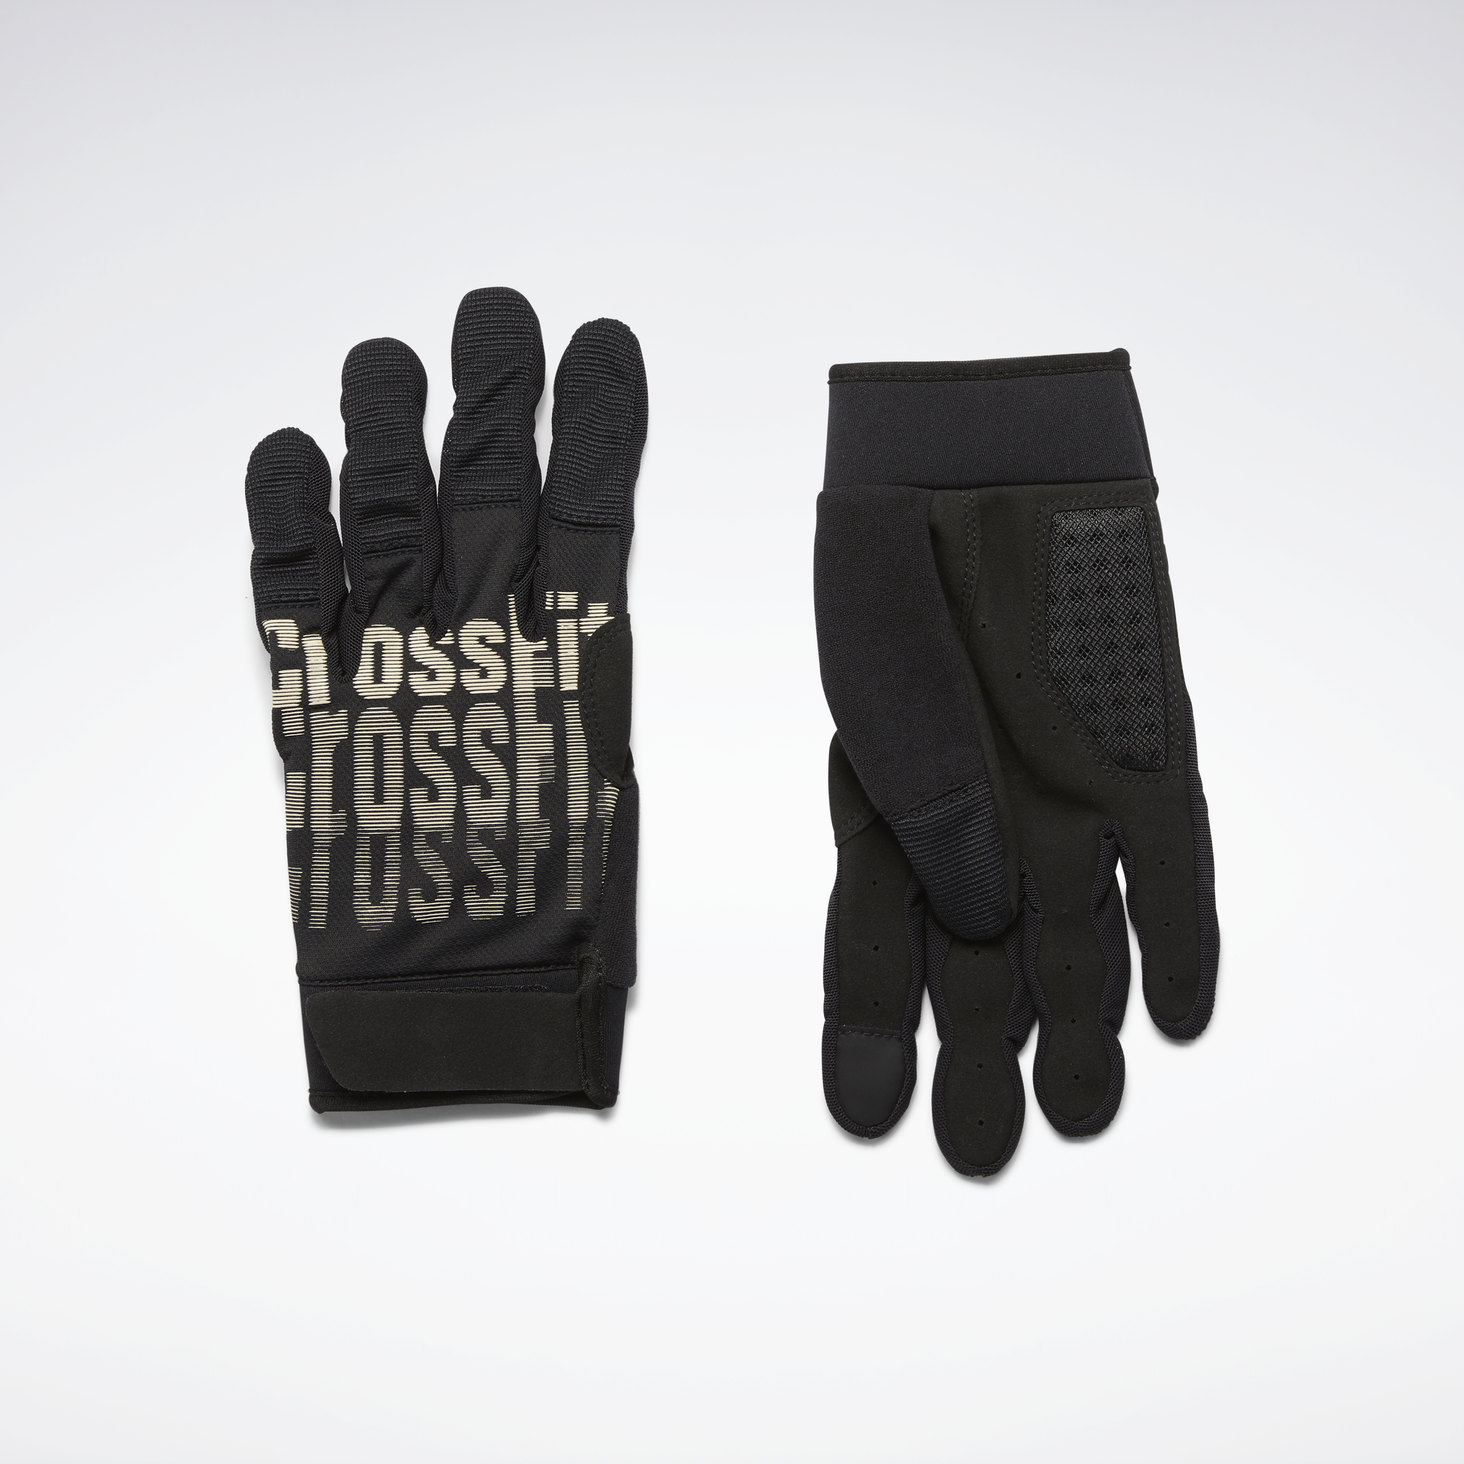 Crossfit Gloves